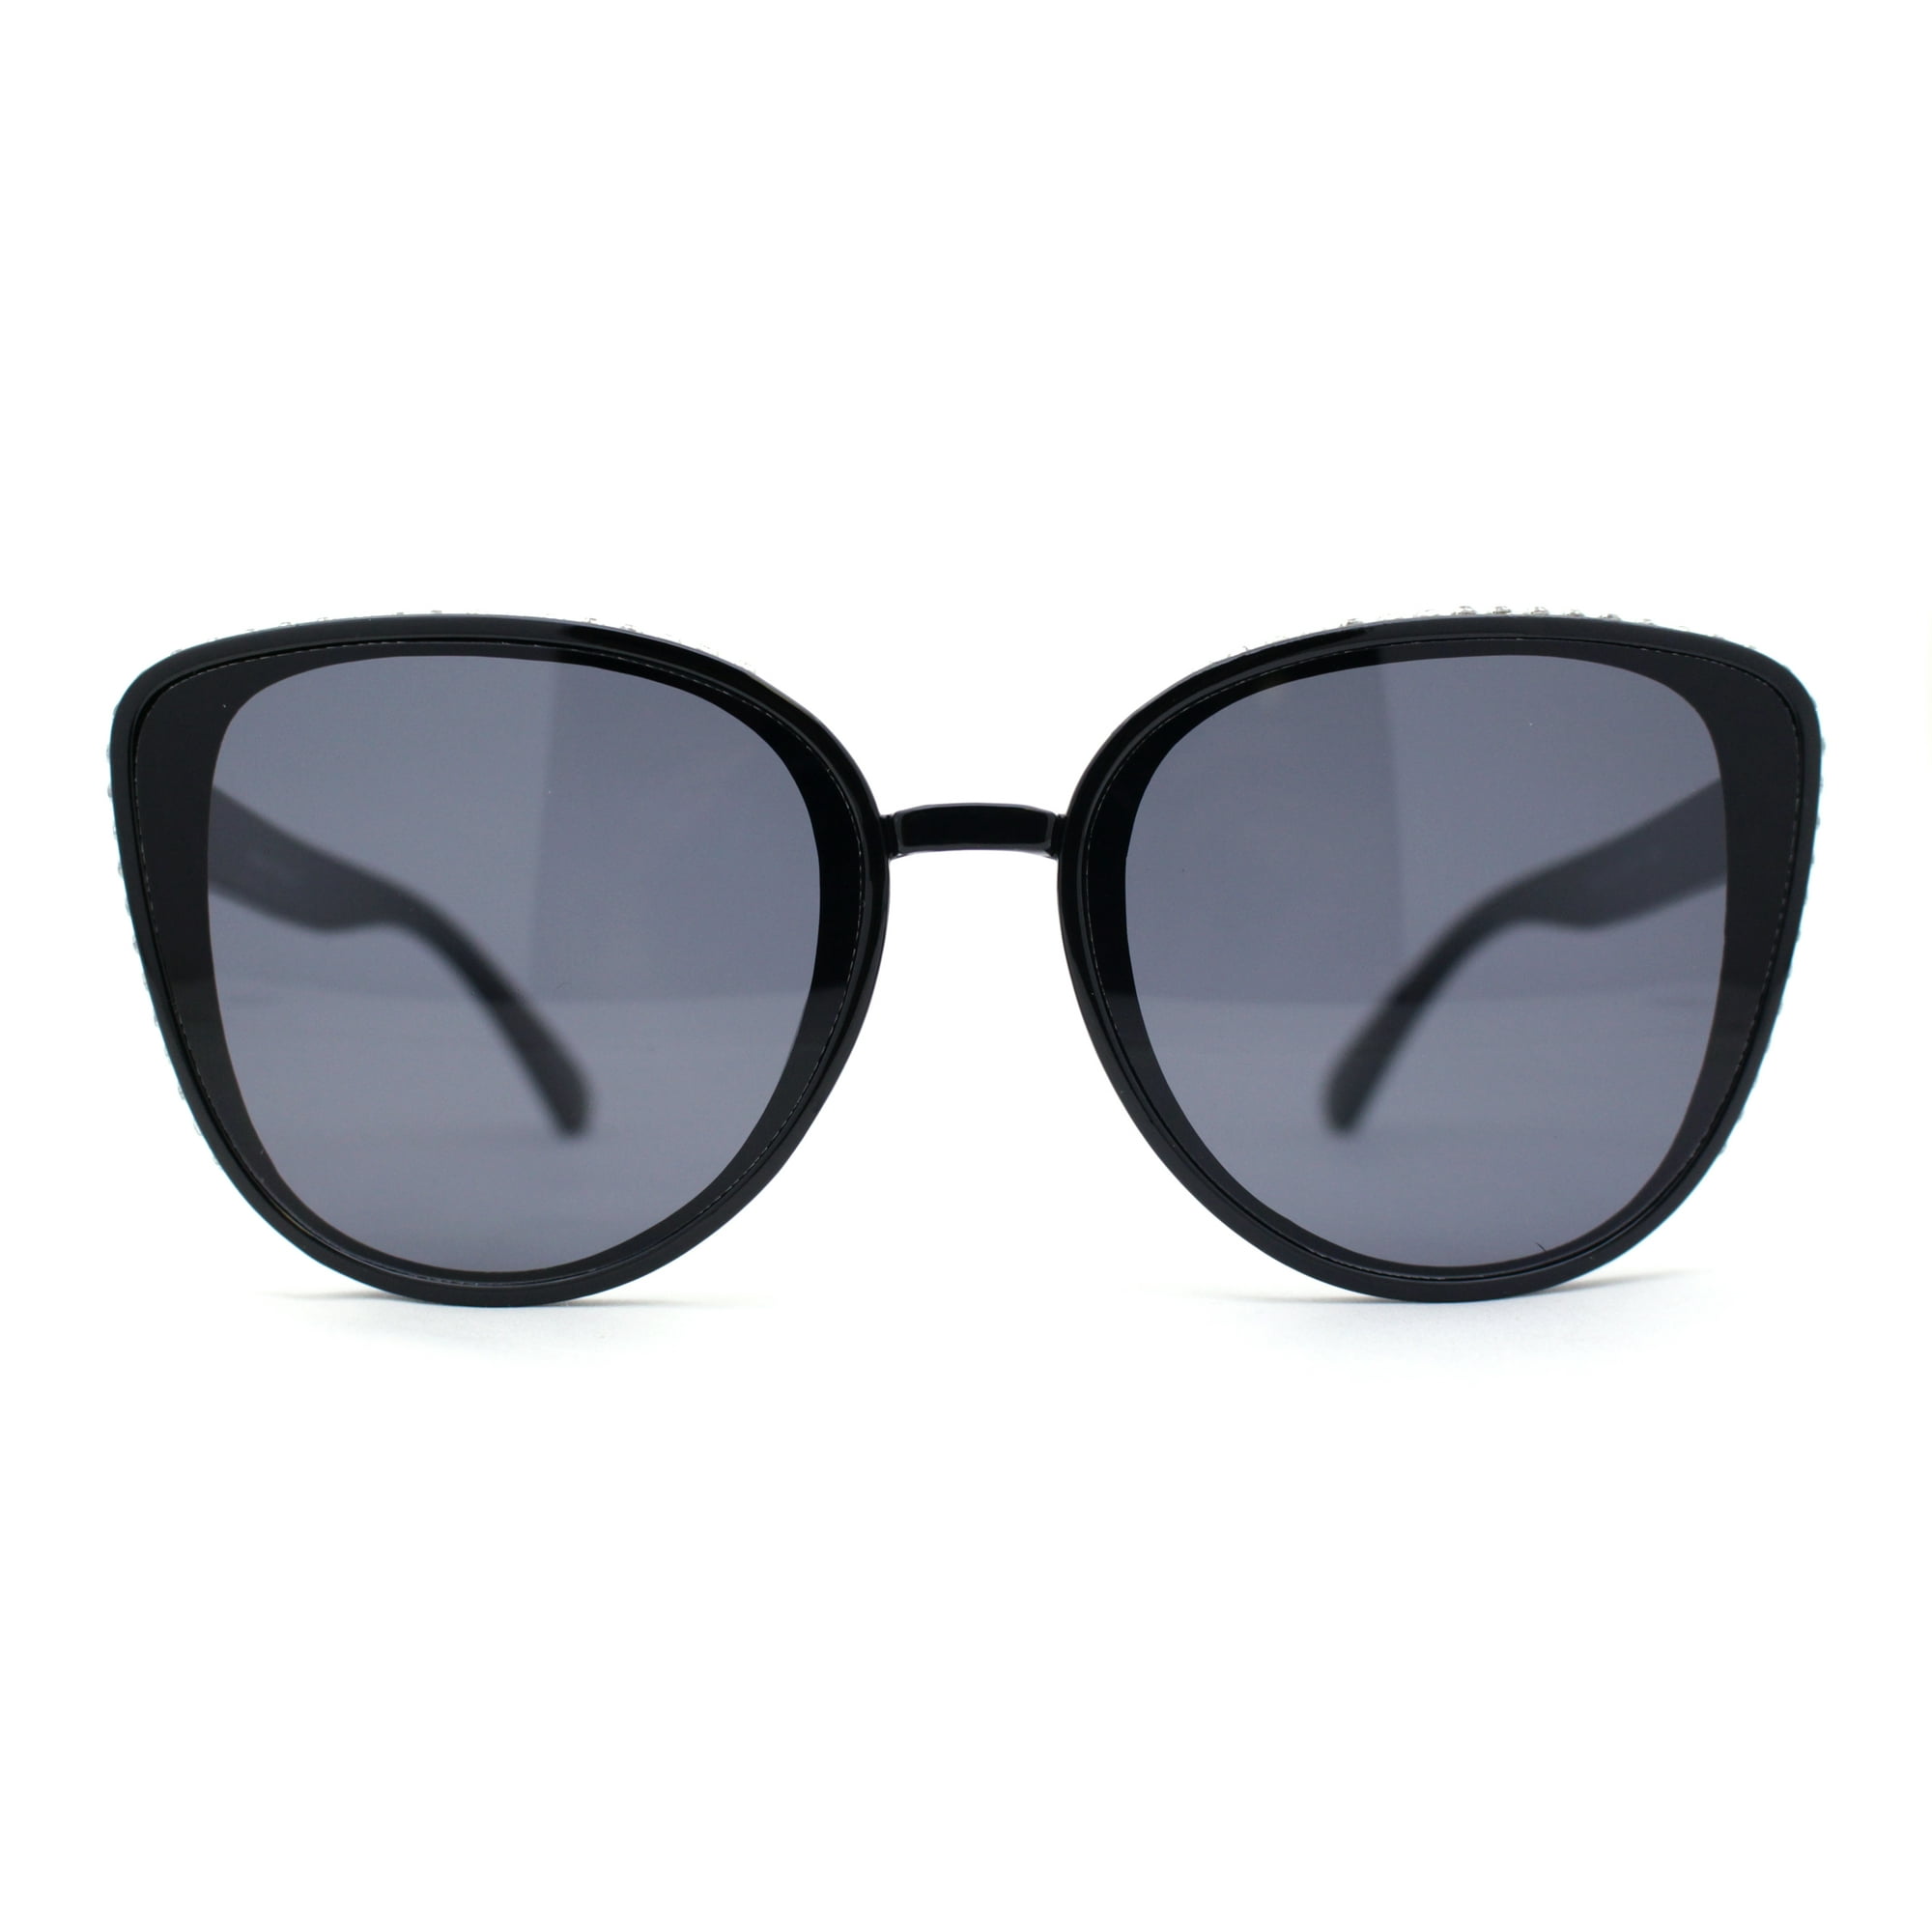 SA106 Womens Luxury Rhinestone Edge Large Cat Eye Sunglasses All Black, Women's, Size: One Size